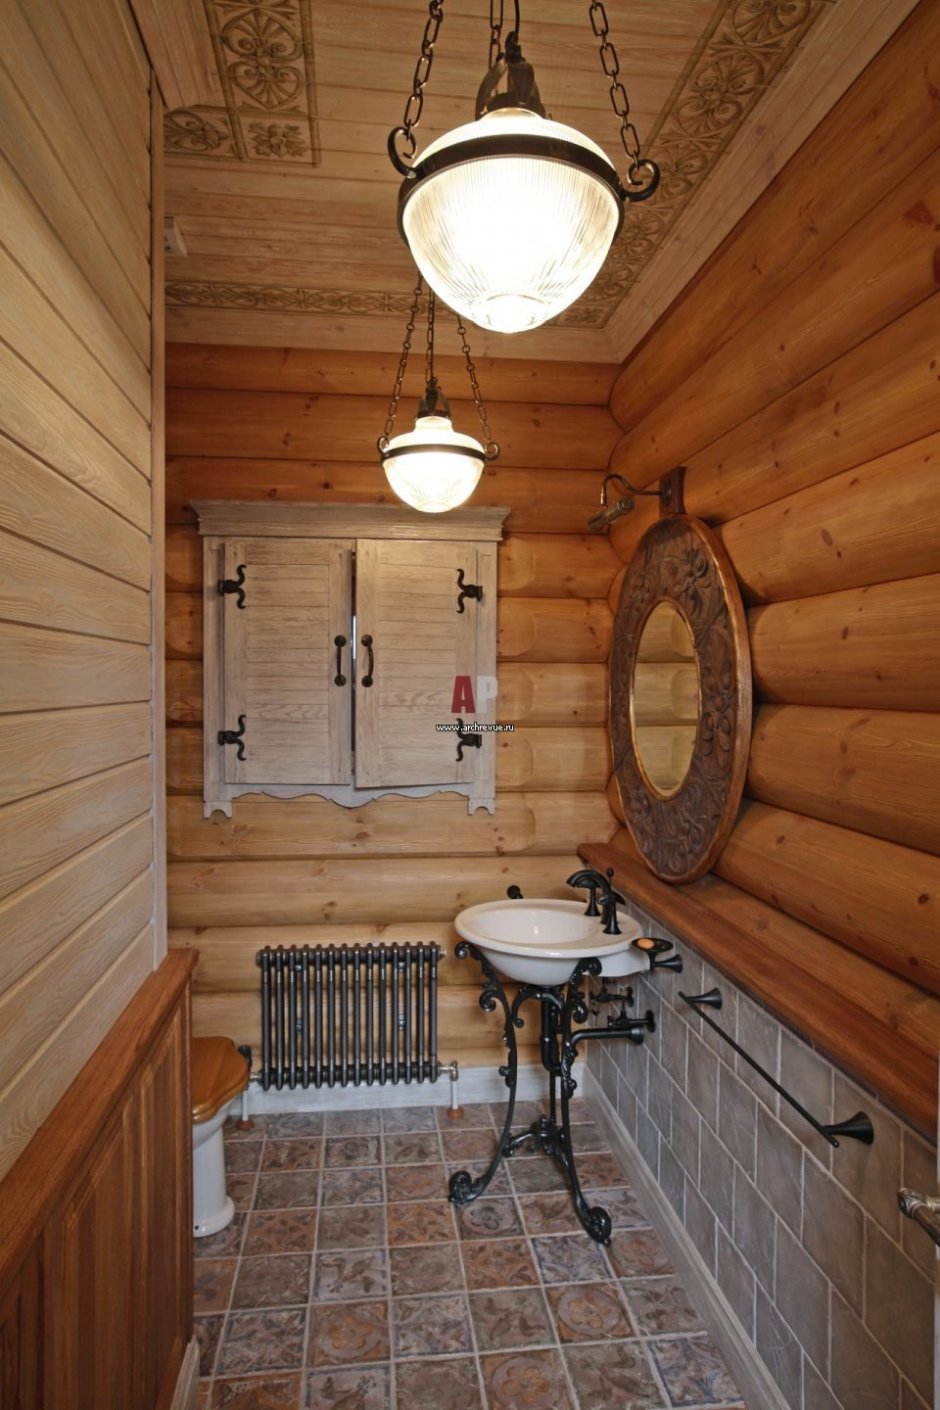 Ванная комната в каркасном доме